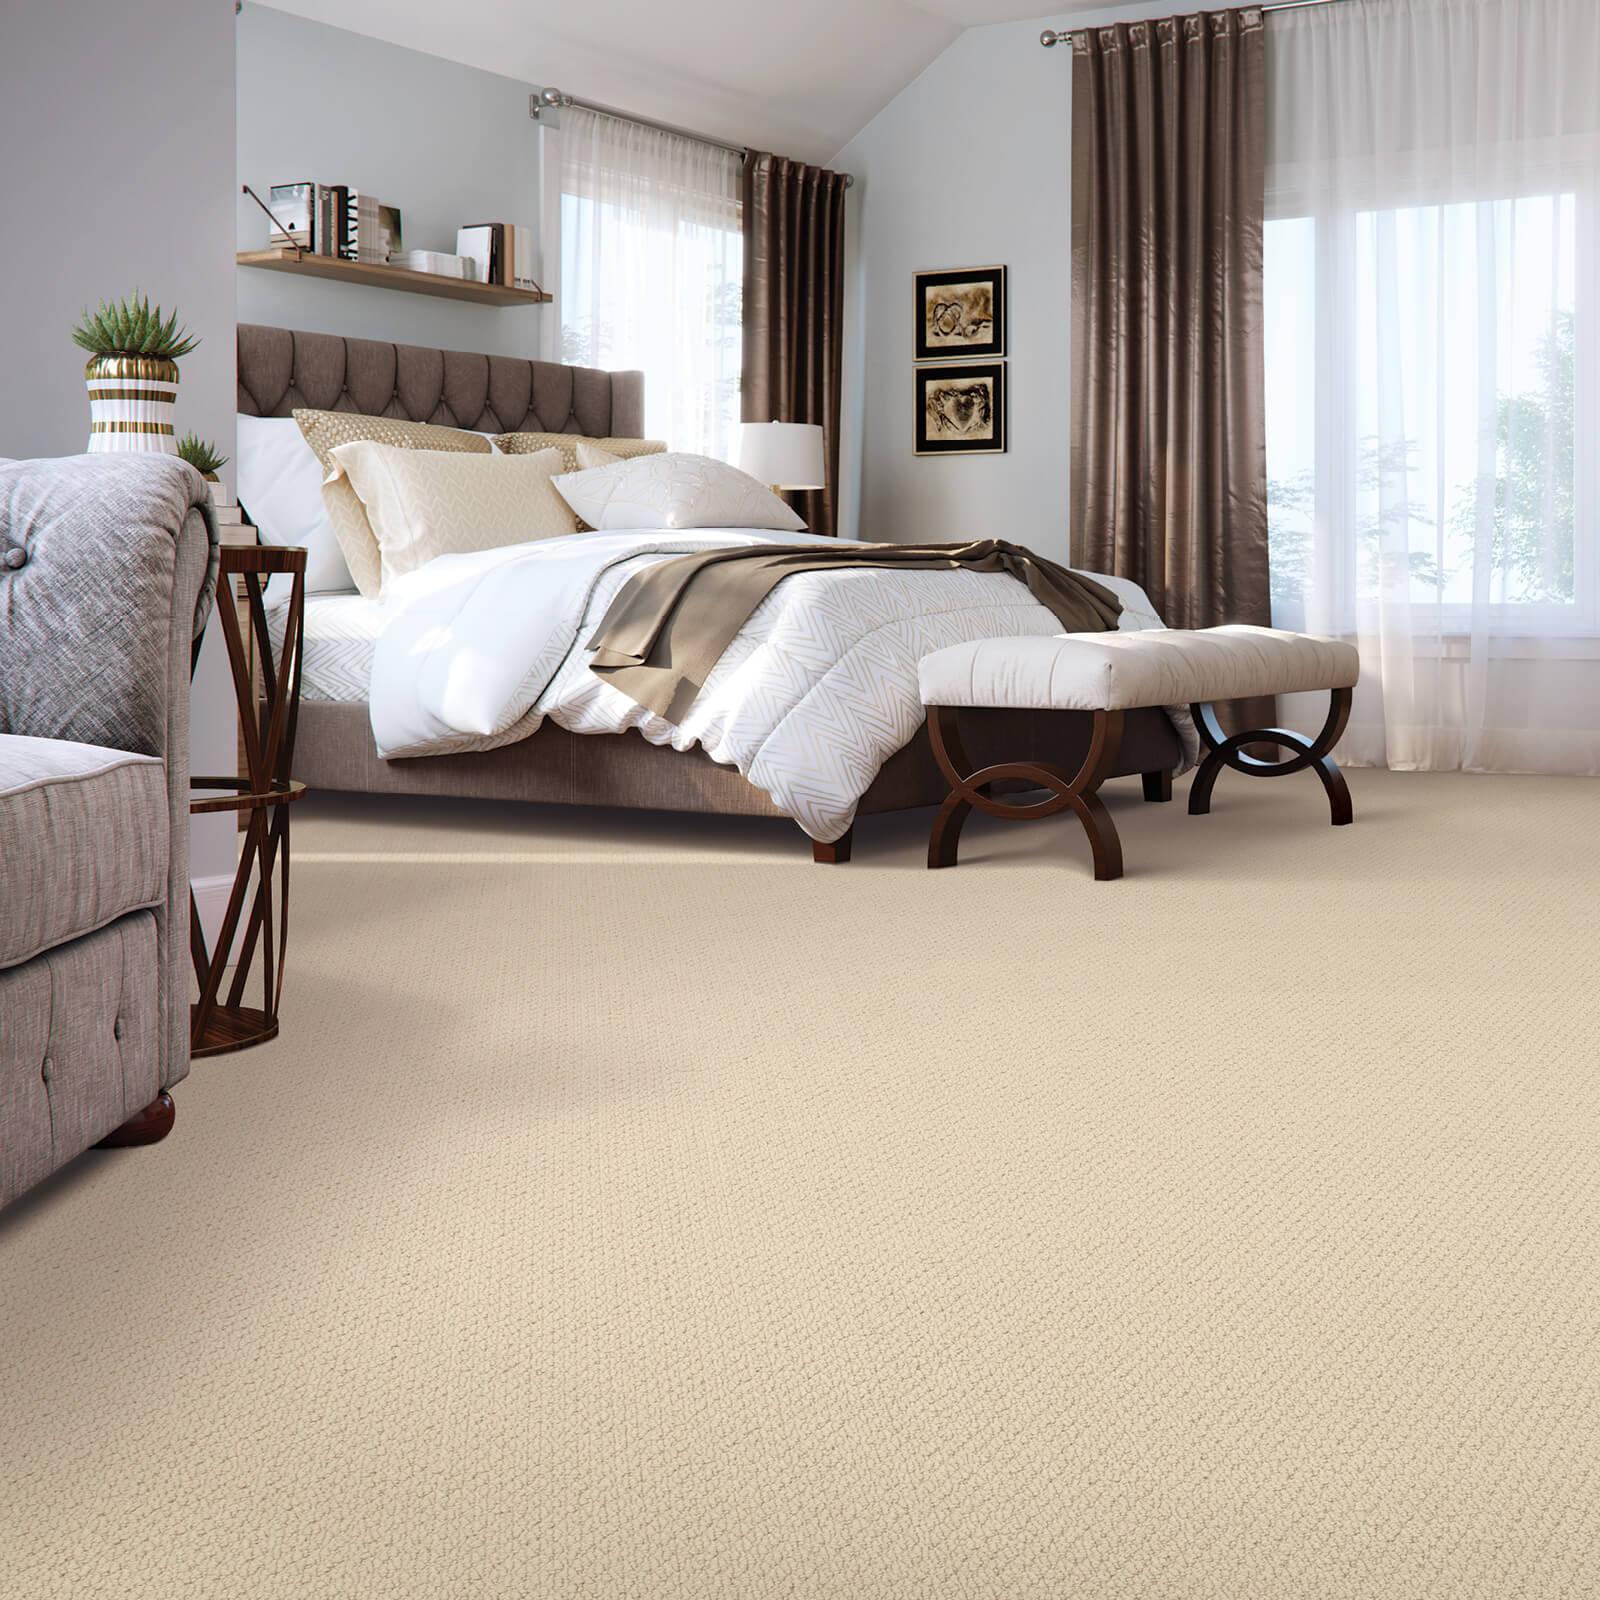 New carpet for bedroom | AJ Rose Carpets